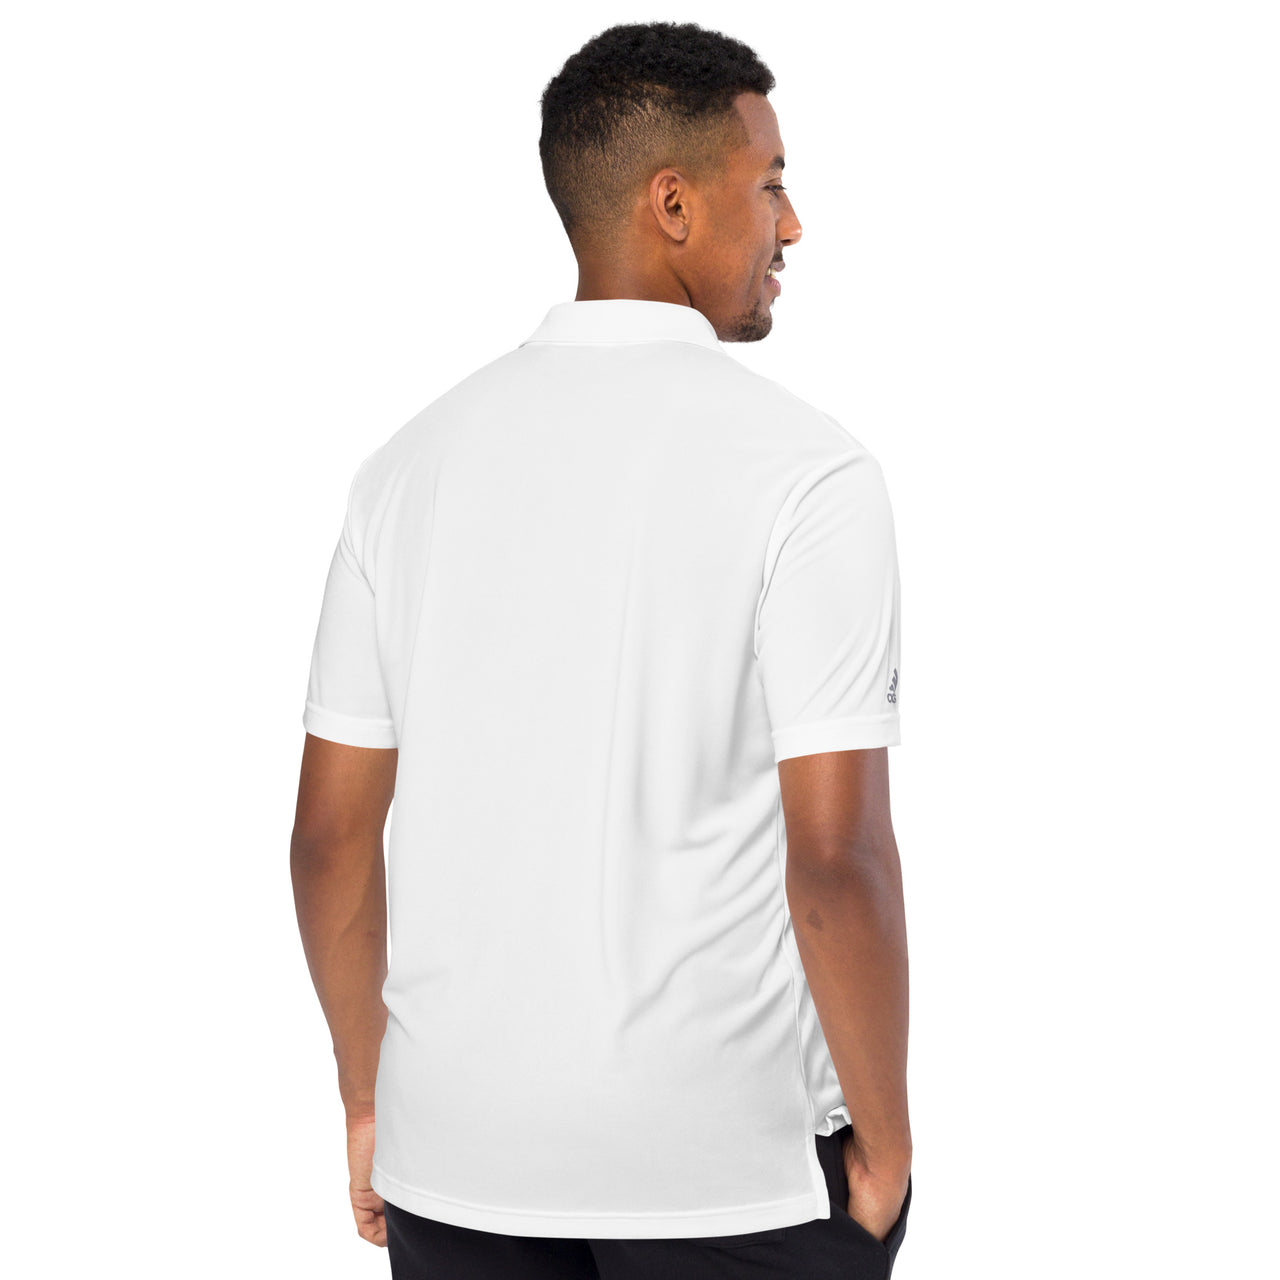 Men's Sagittarius White Polo Shirt